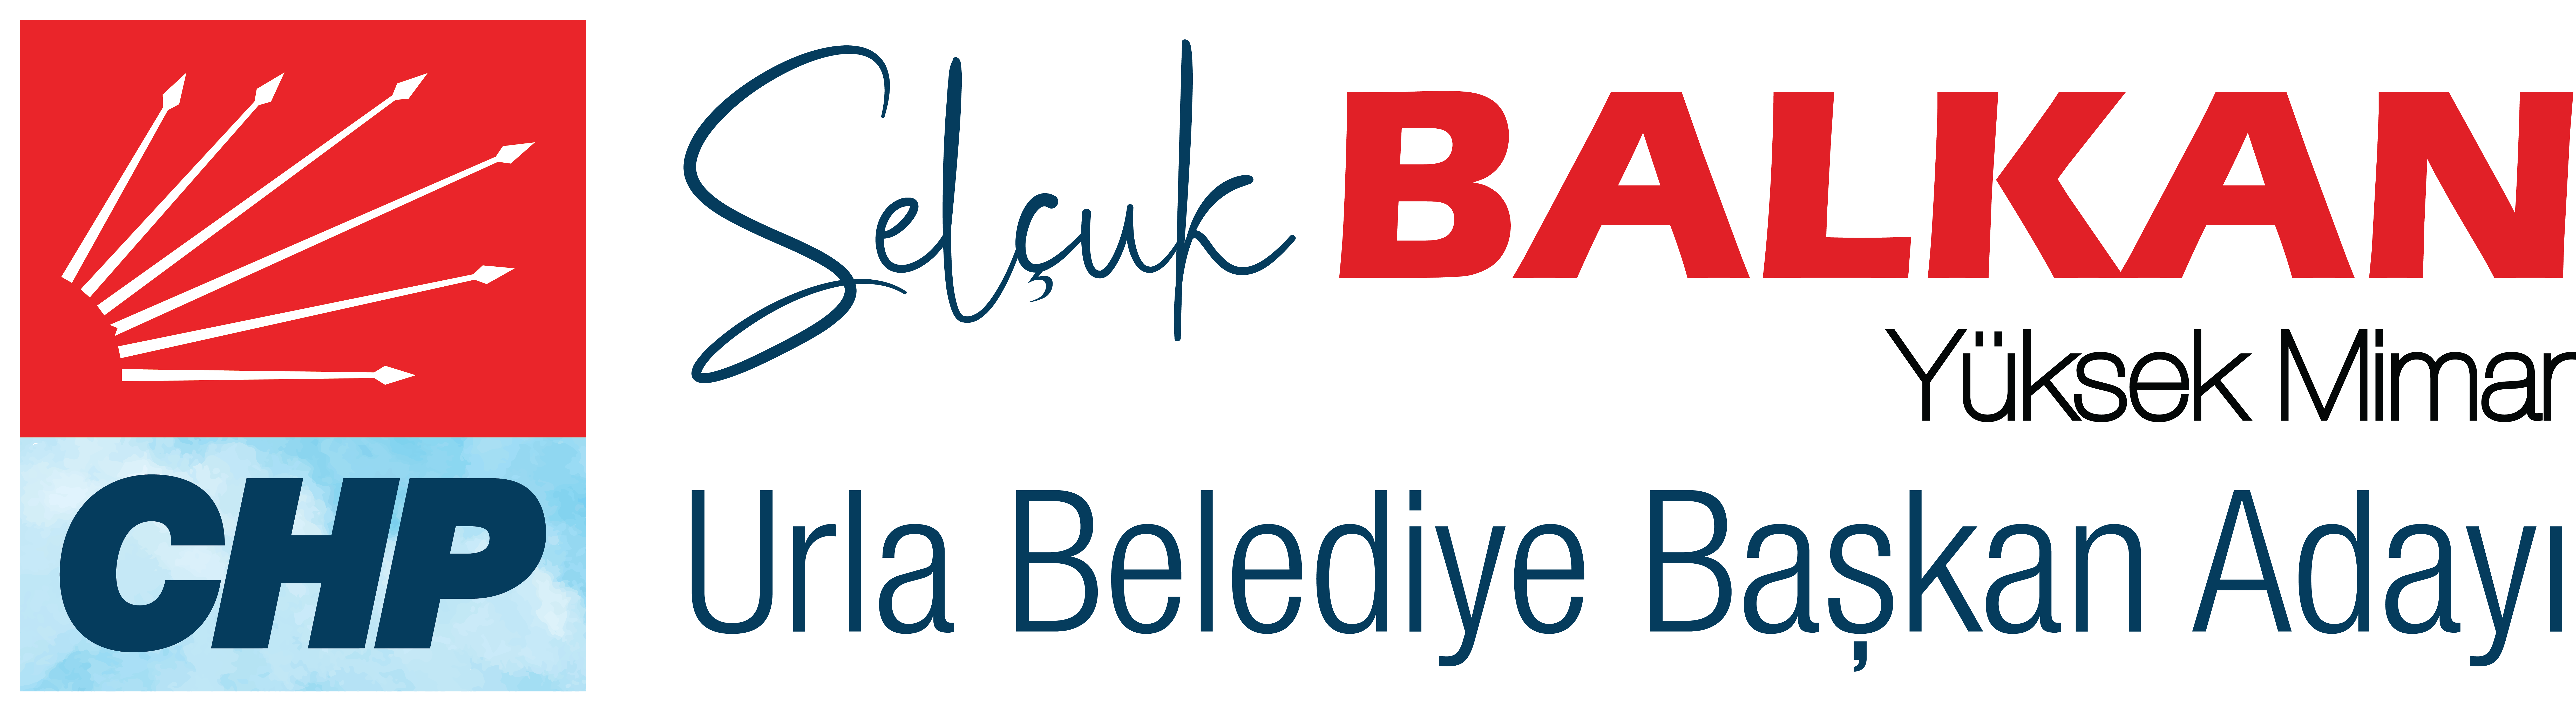 Selcuk-Balkan-CHP-Logo-PNG.png